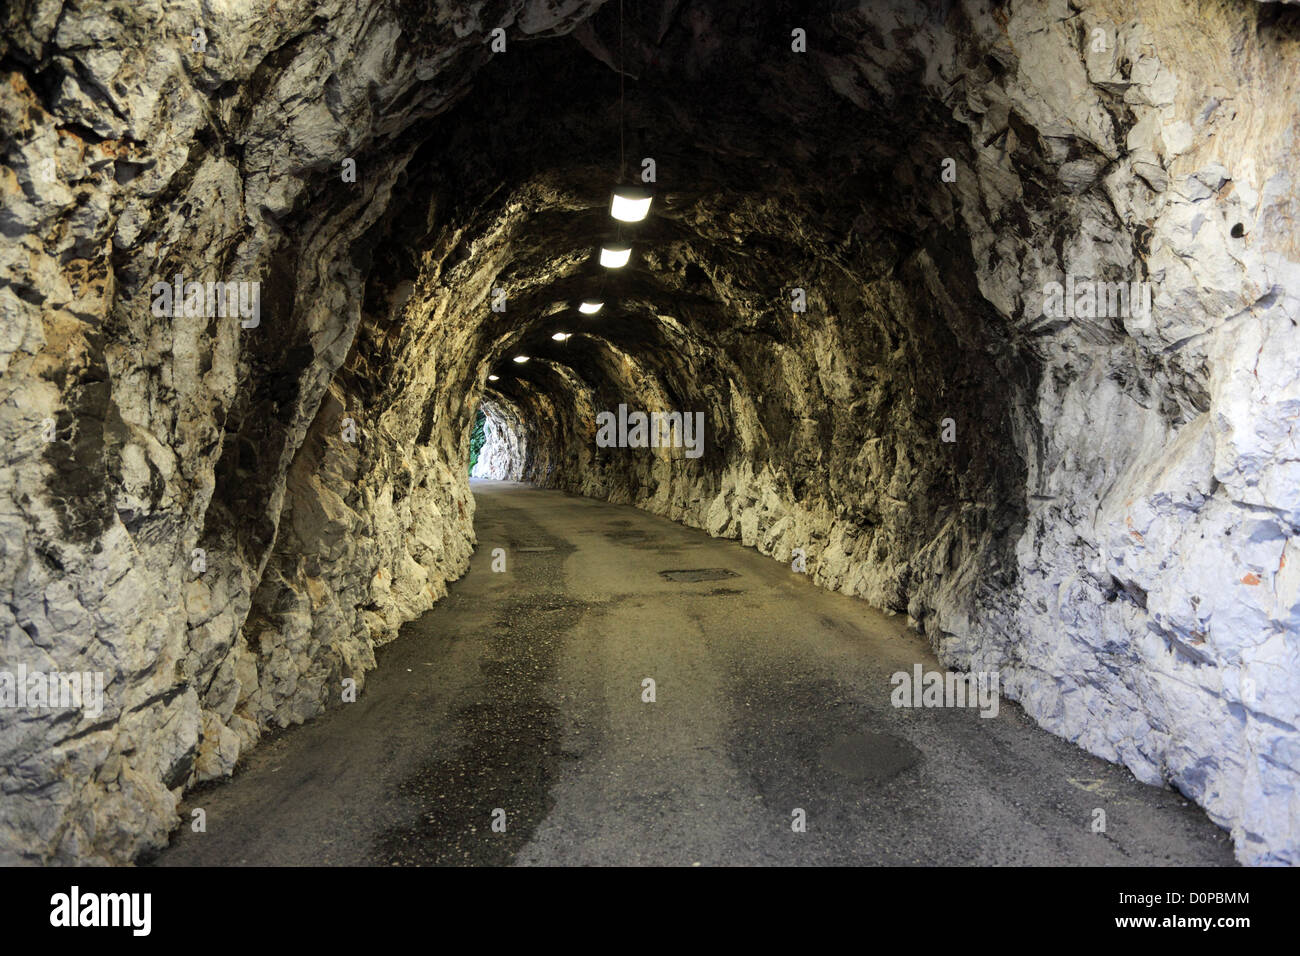 Narrow illuminated tunnel in a rock Stock Photo